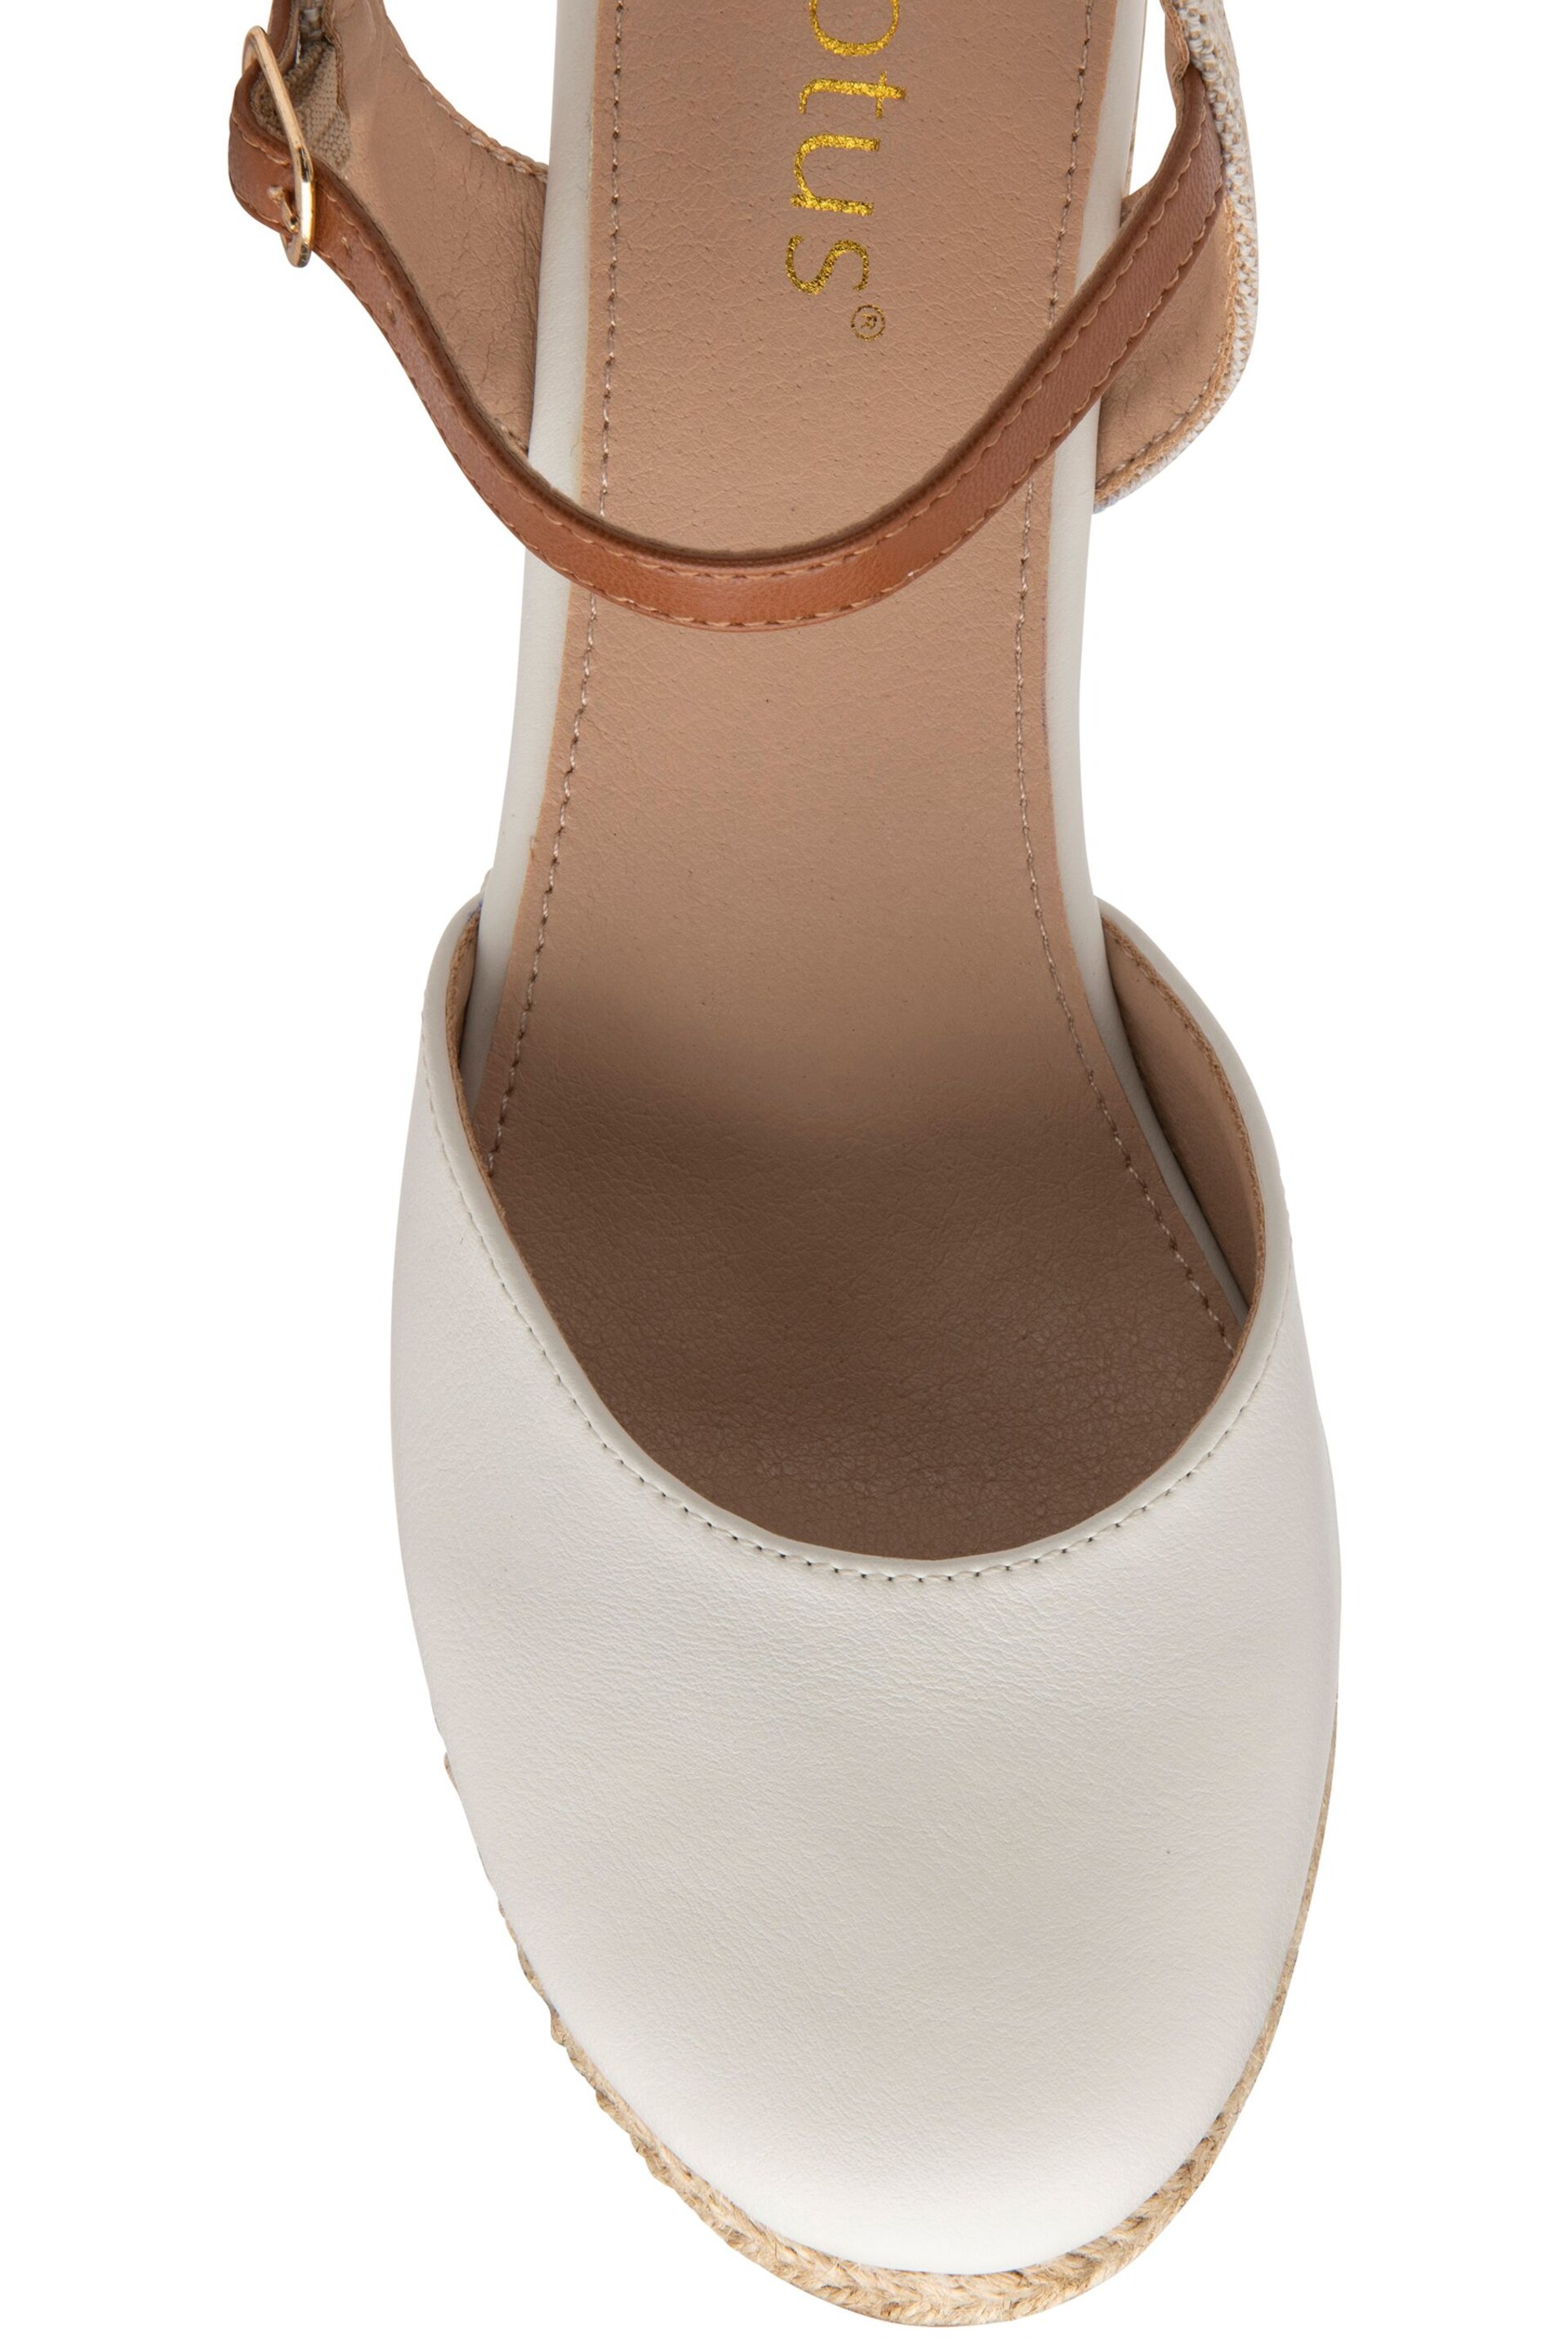 Lotus White Wedge Espadrille Shoes - Image 4 of 4